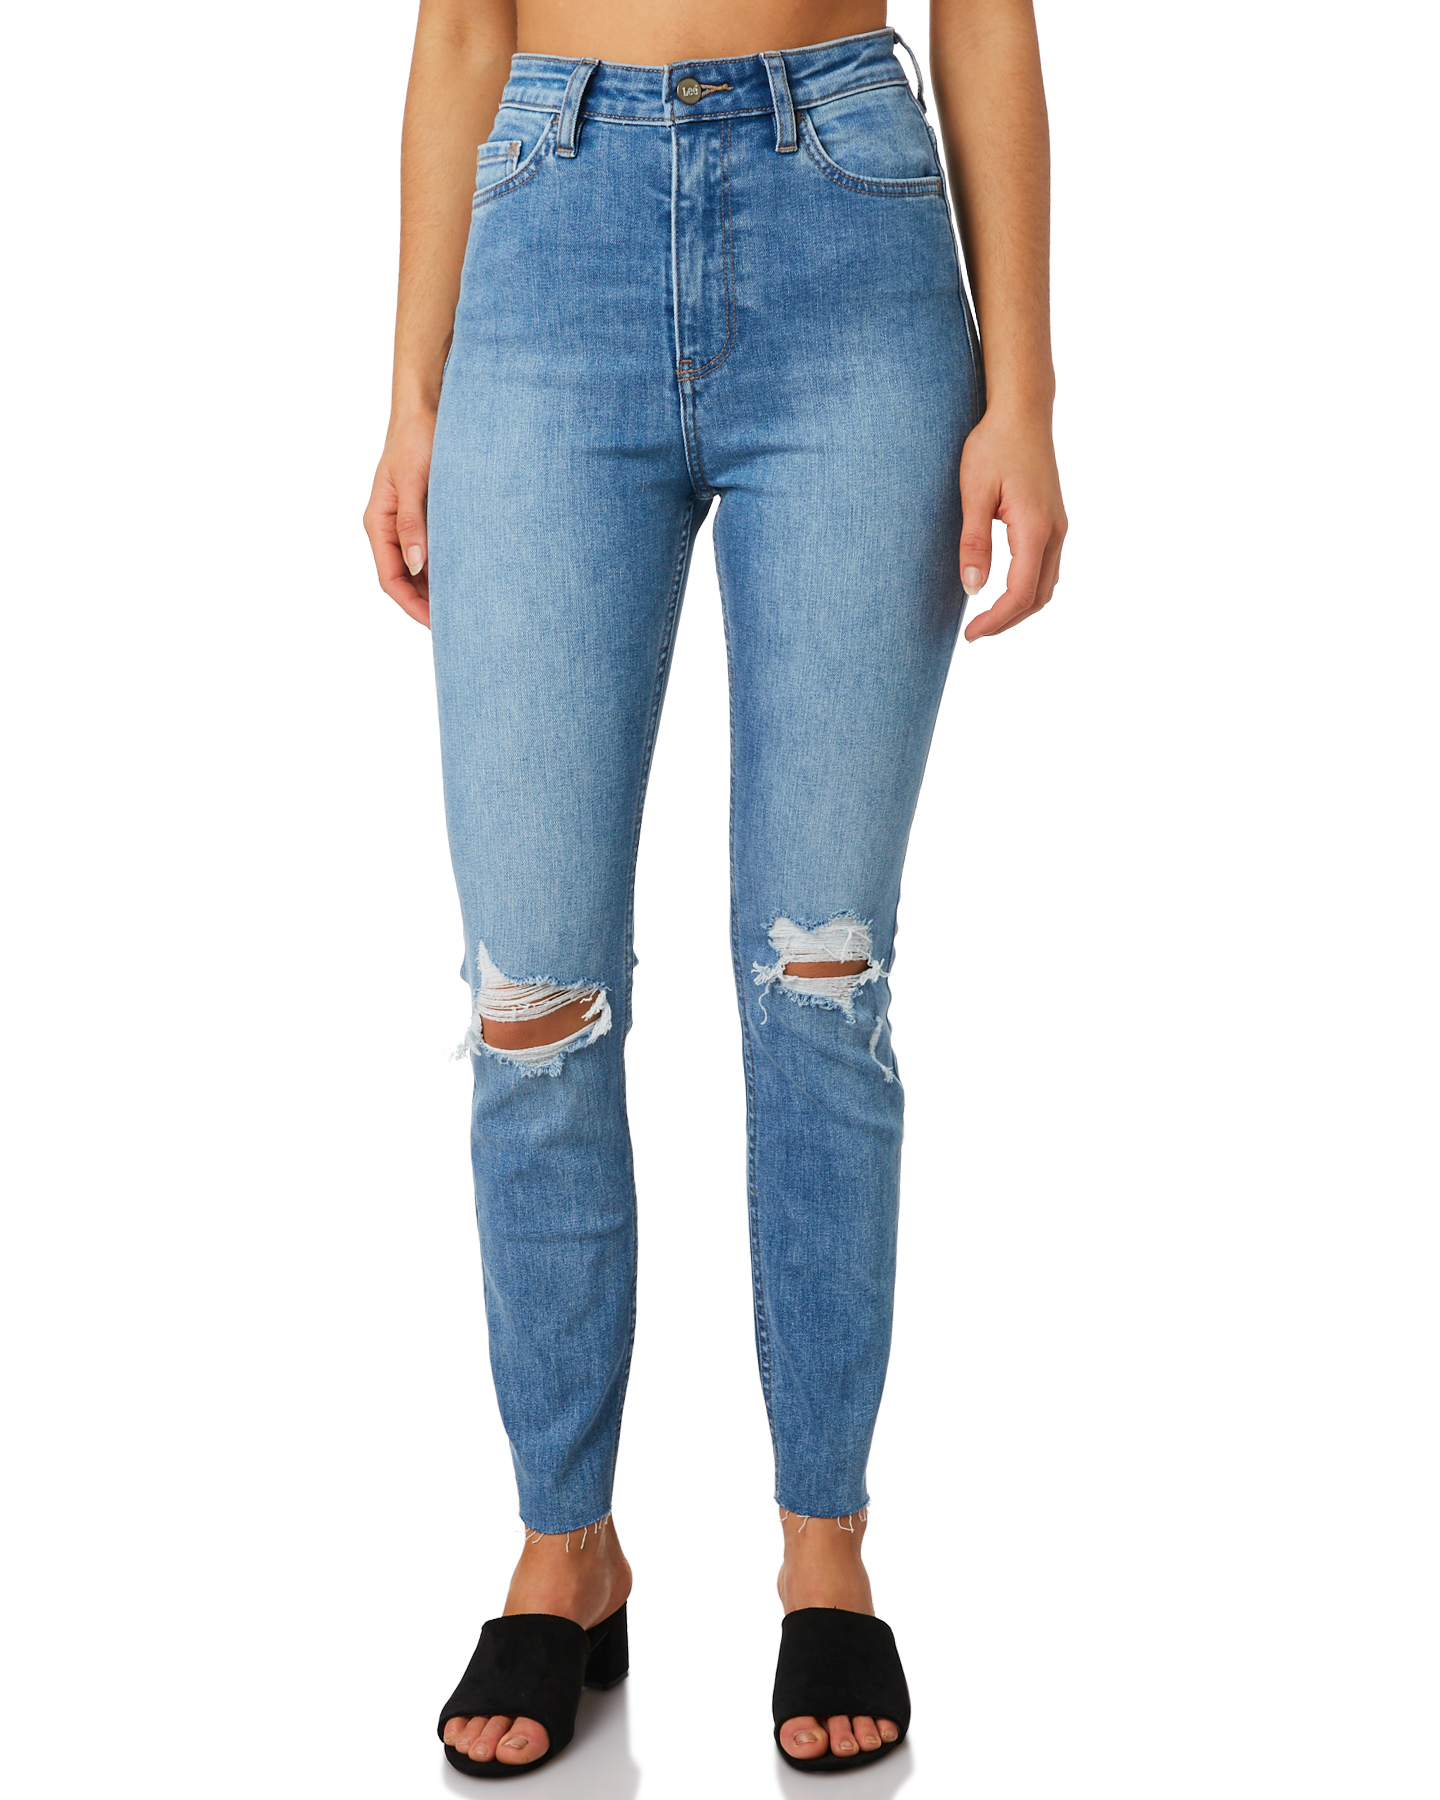 crop jeans australia